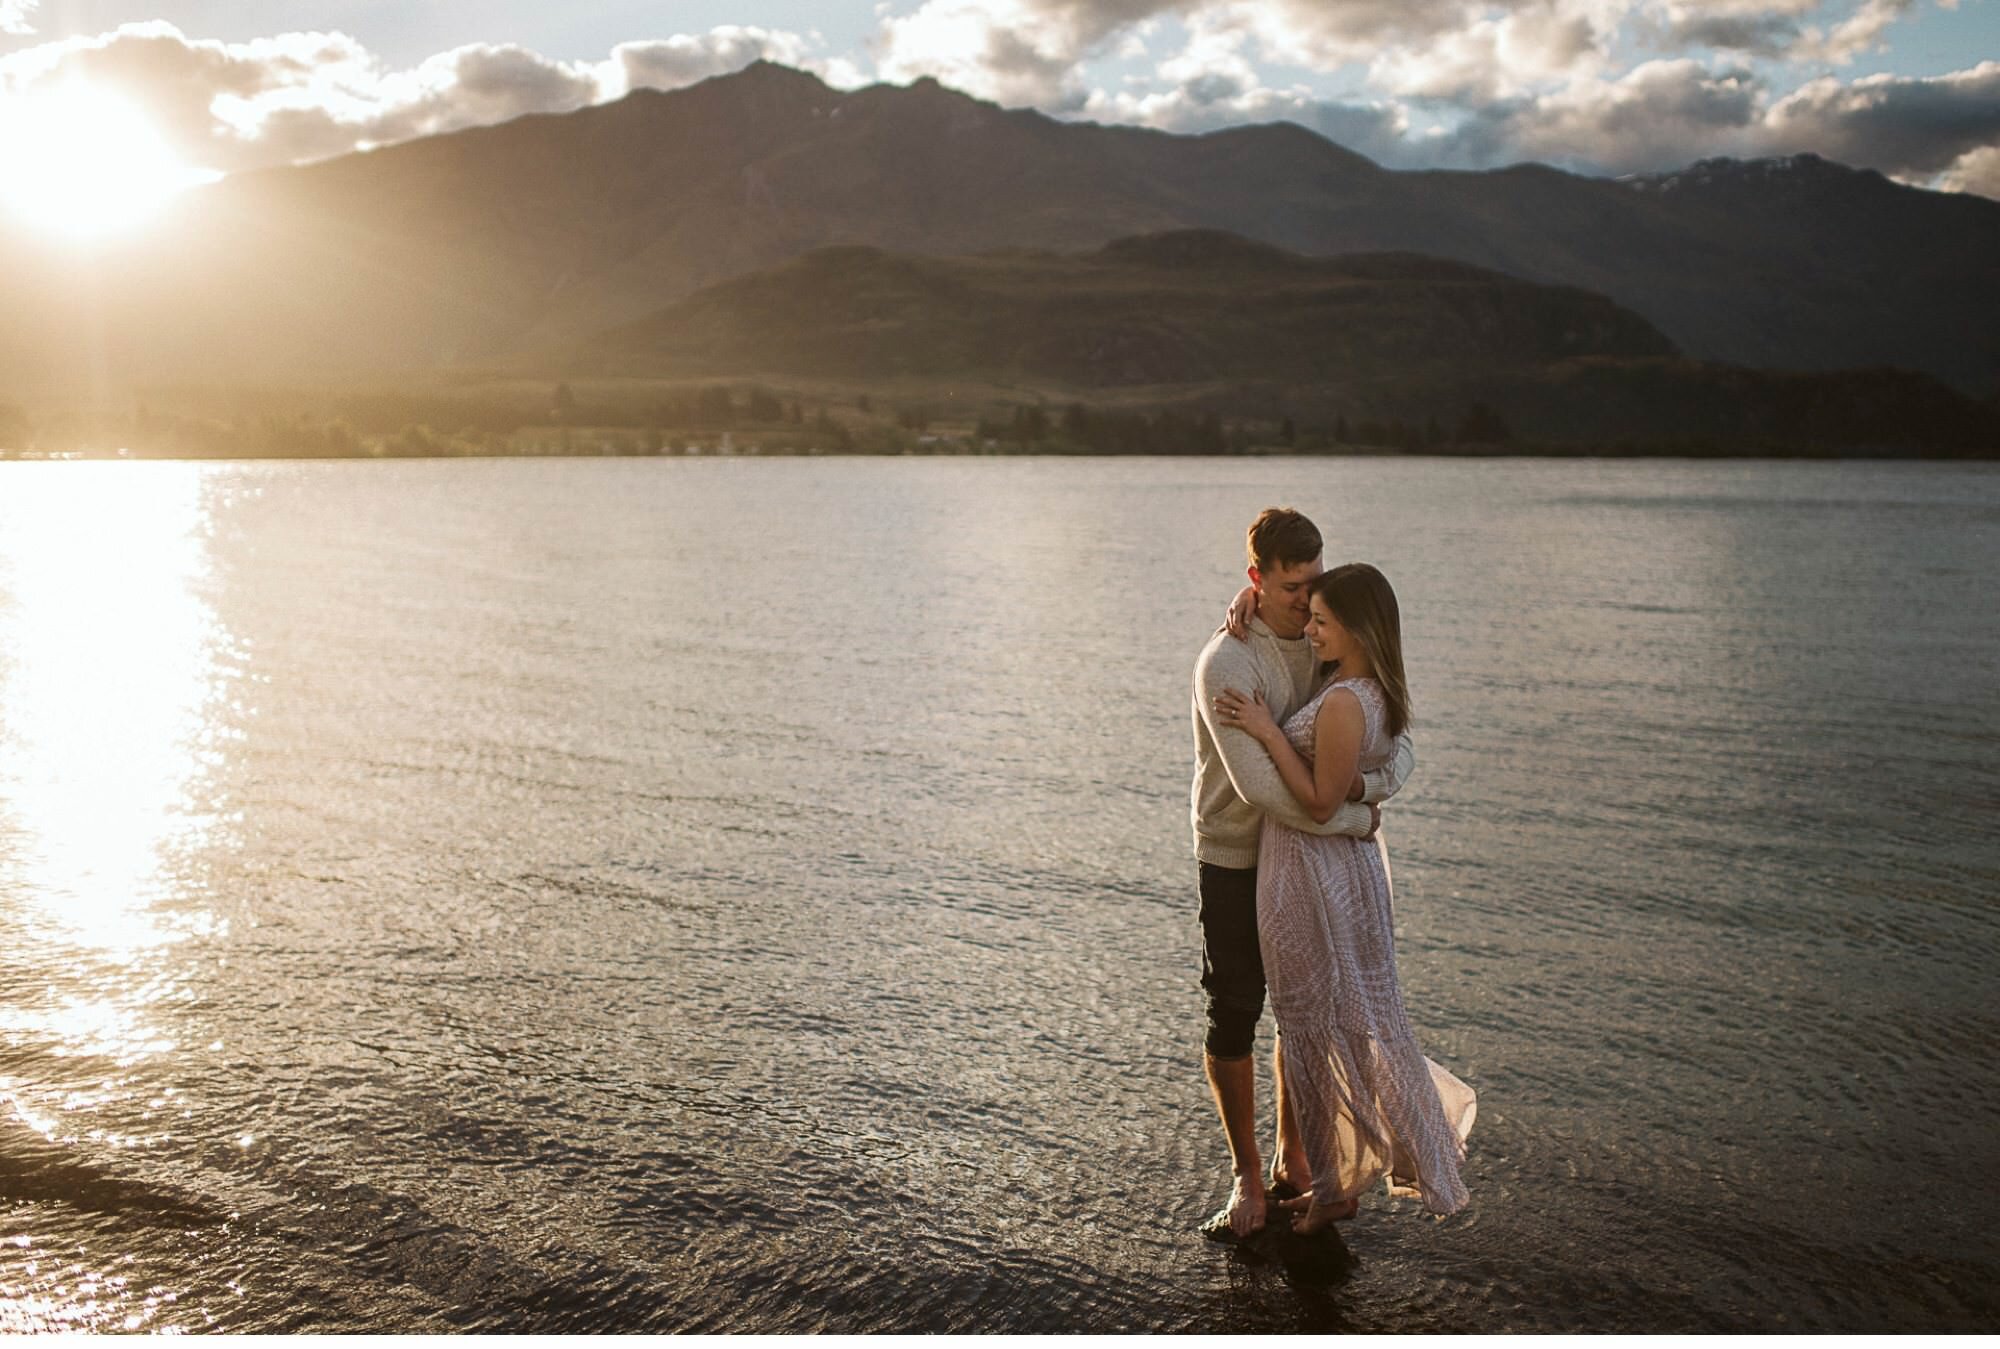 001 - New Zealand Wedding Photography Highlights.jpg